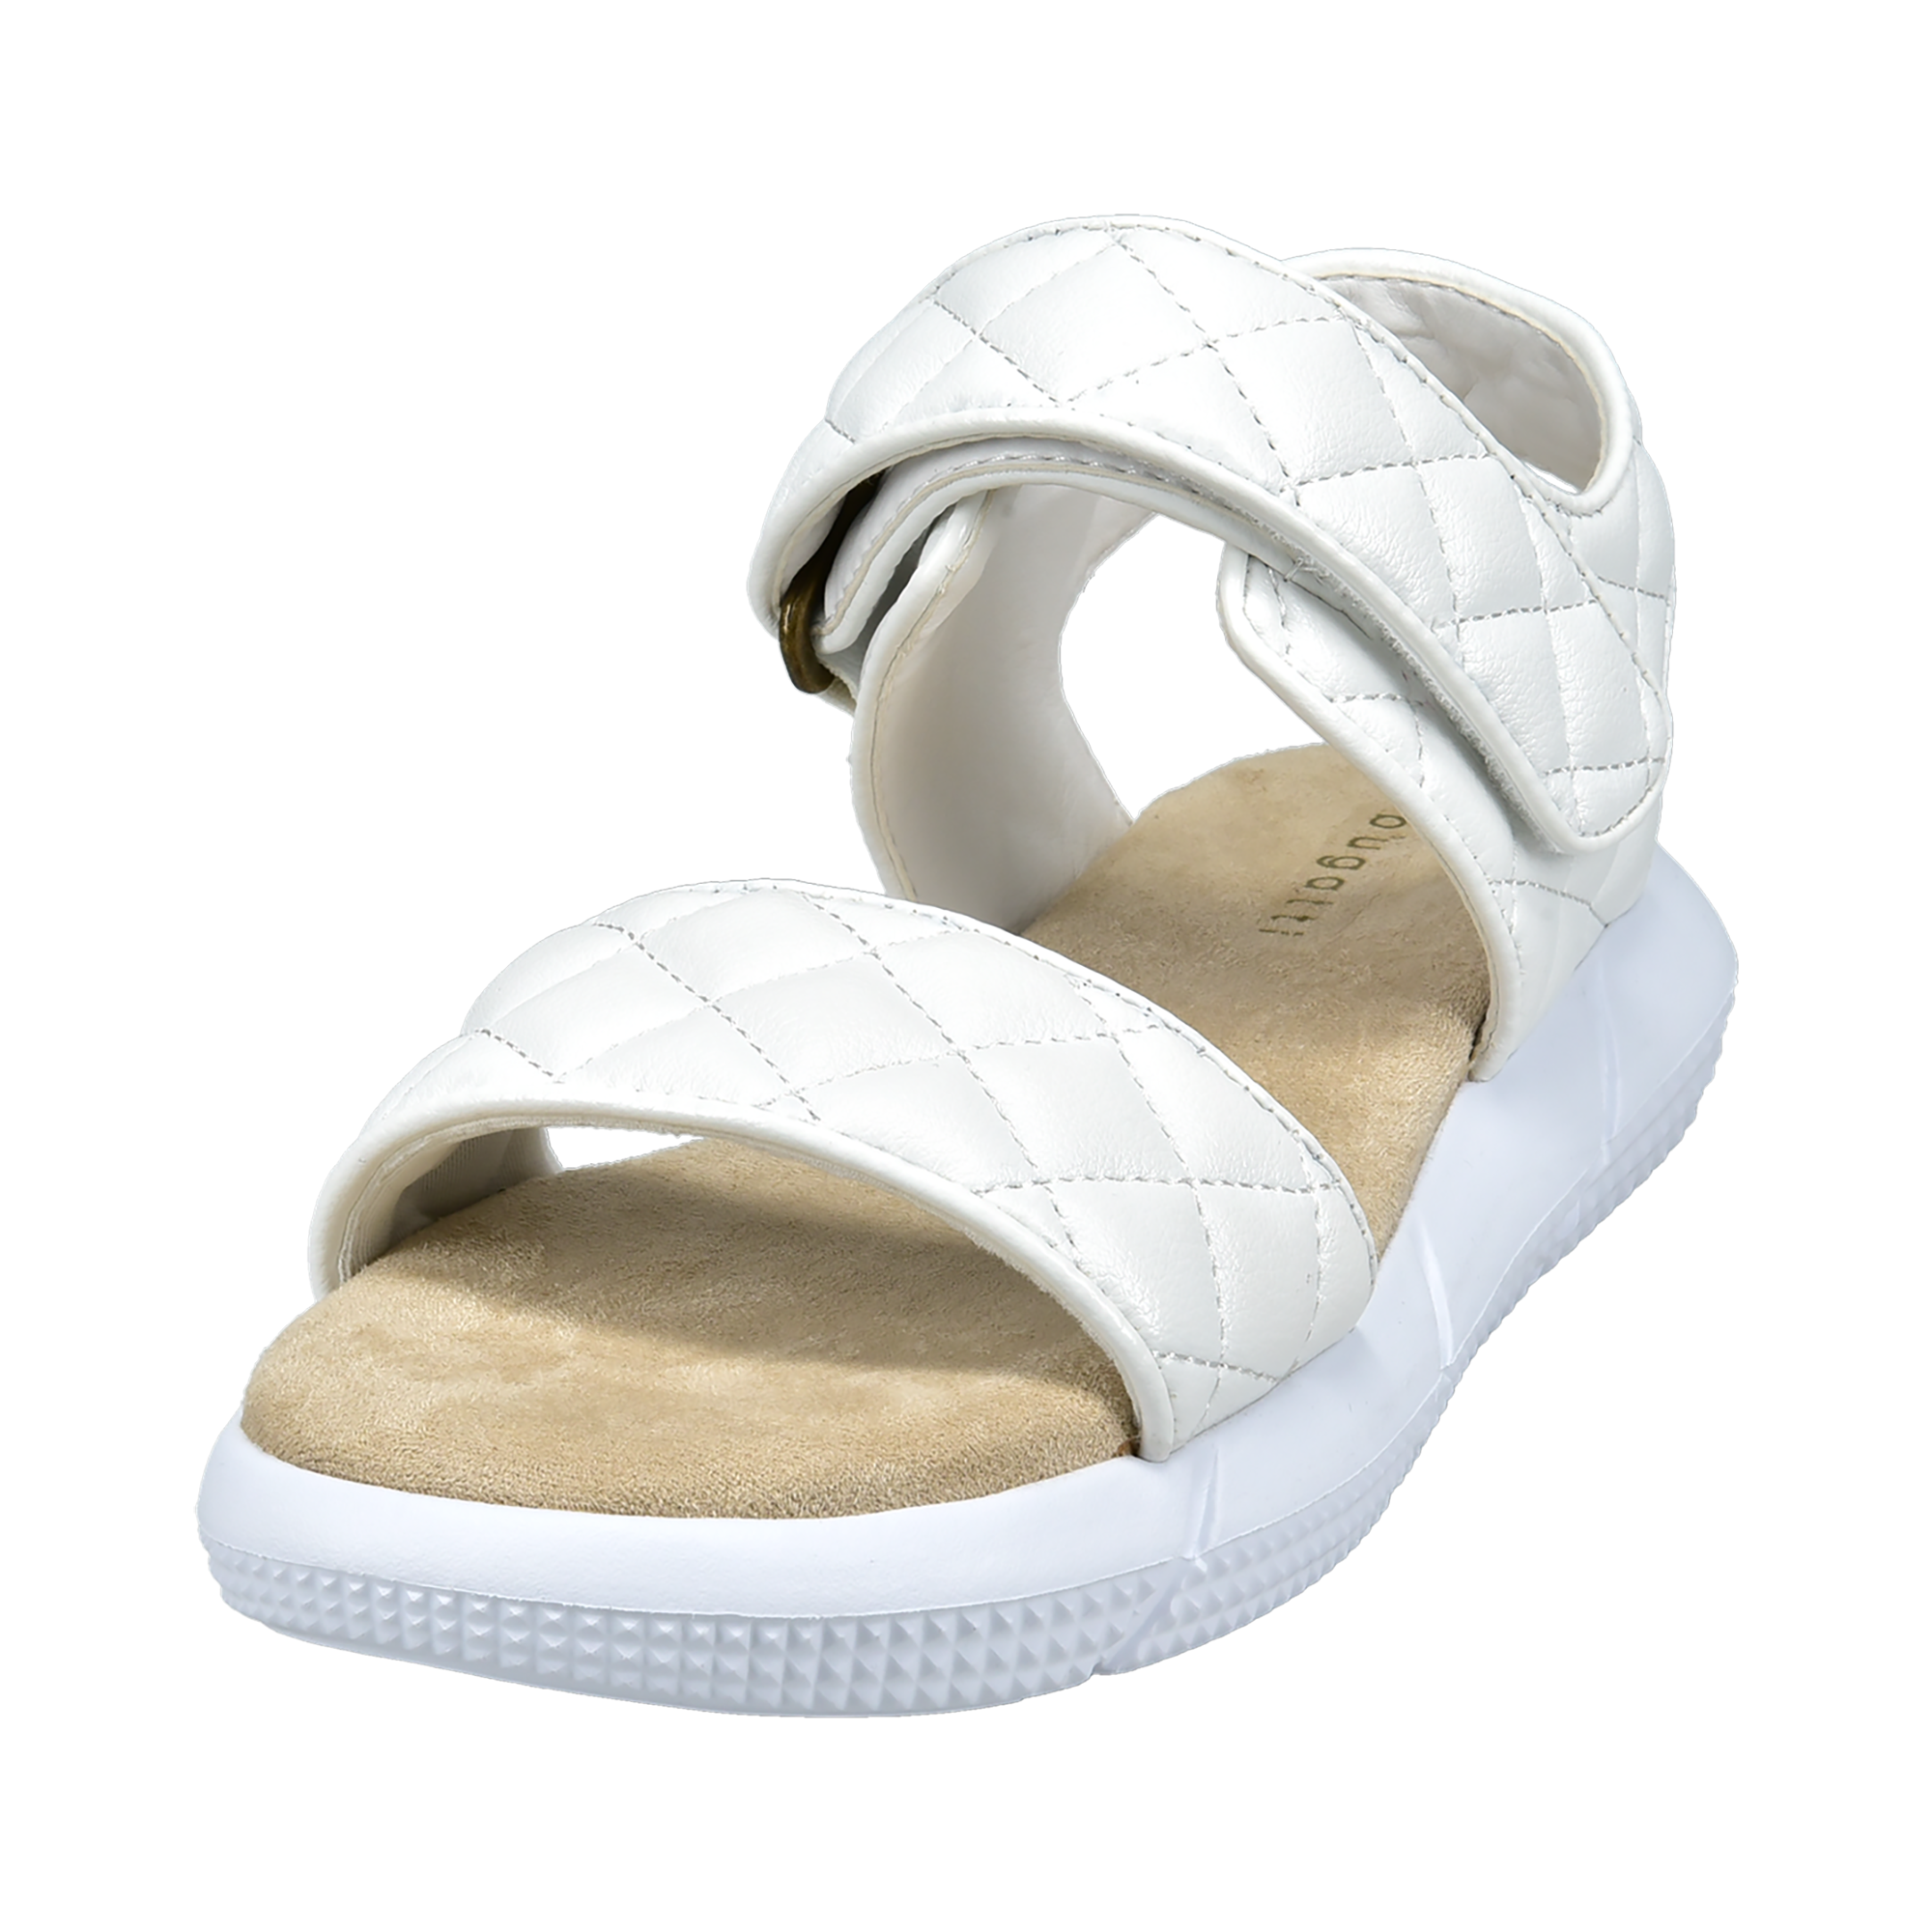 Sandale weiß